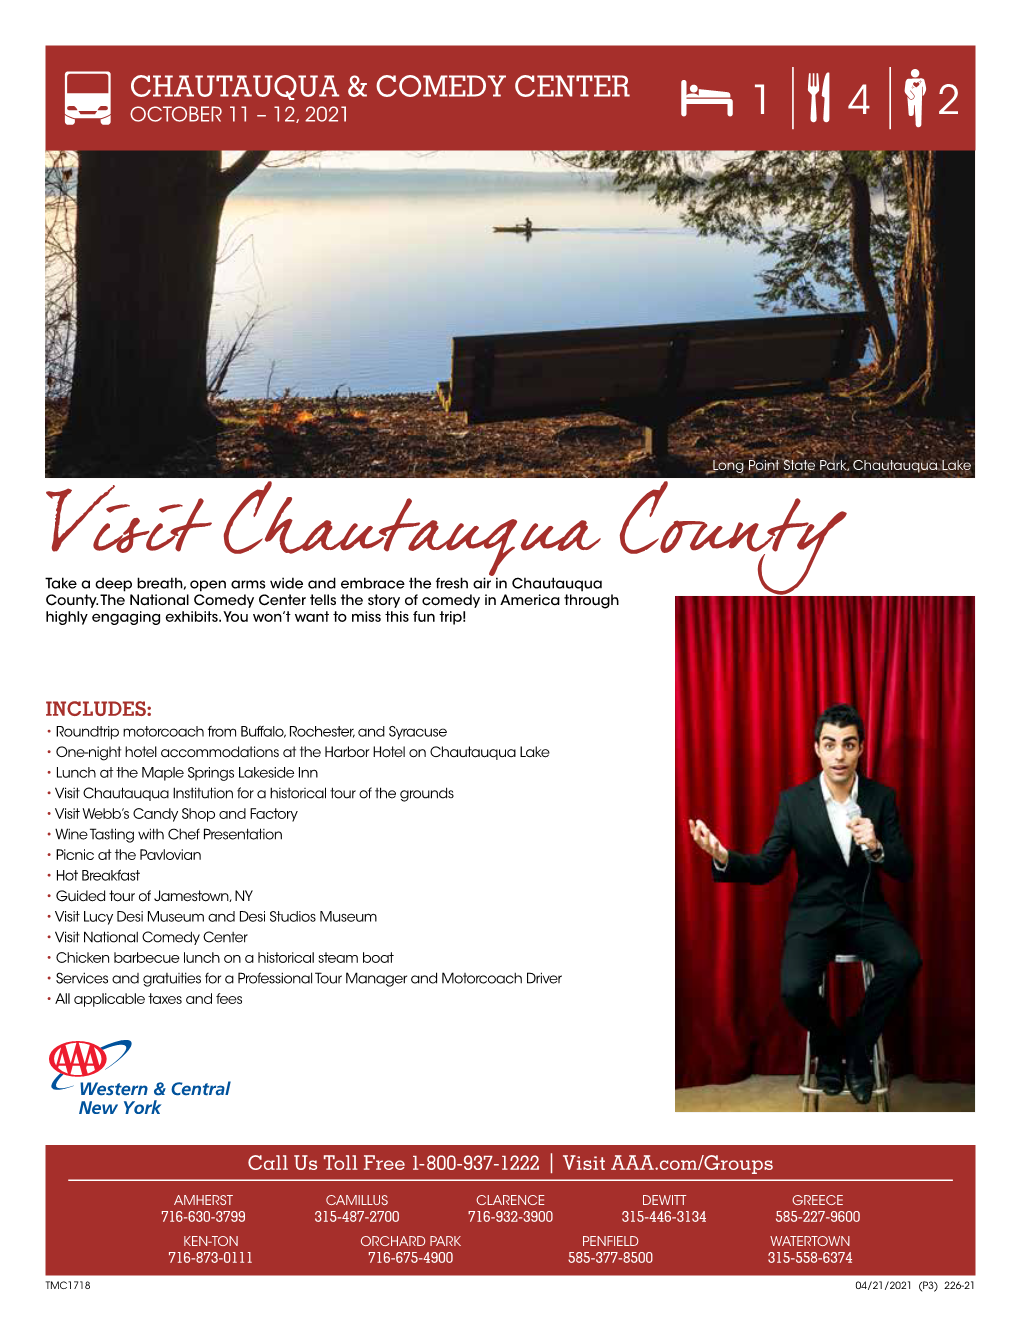 Visit Chautauqua County